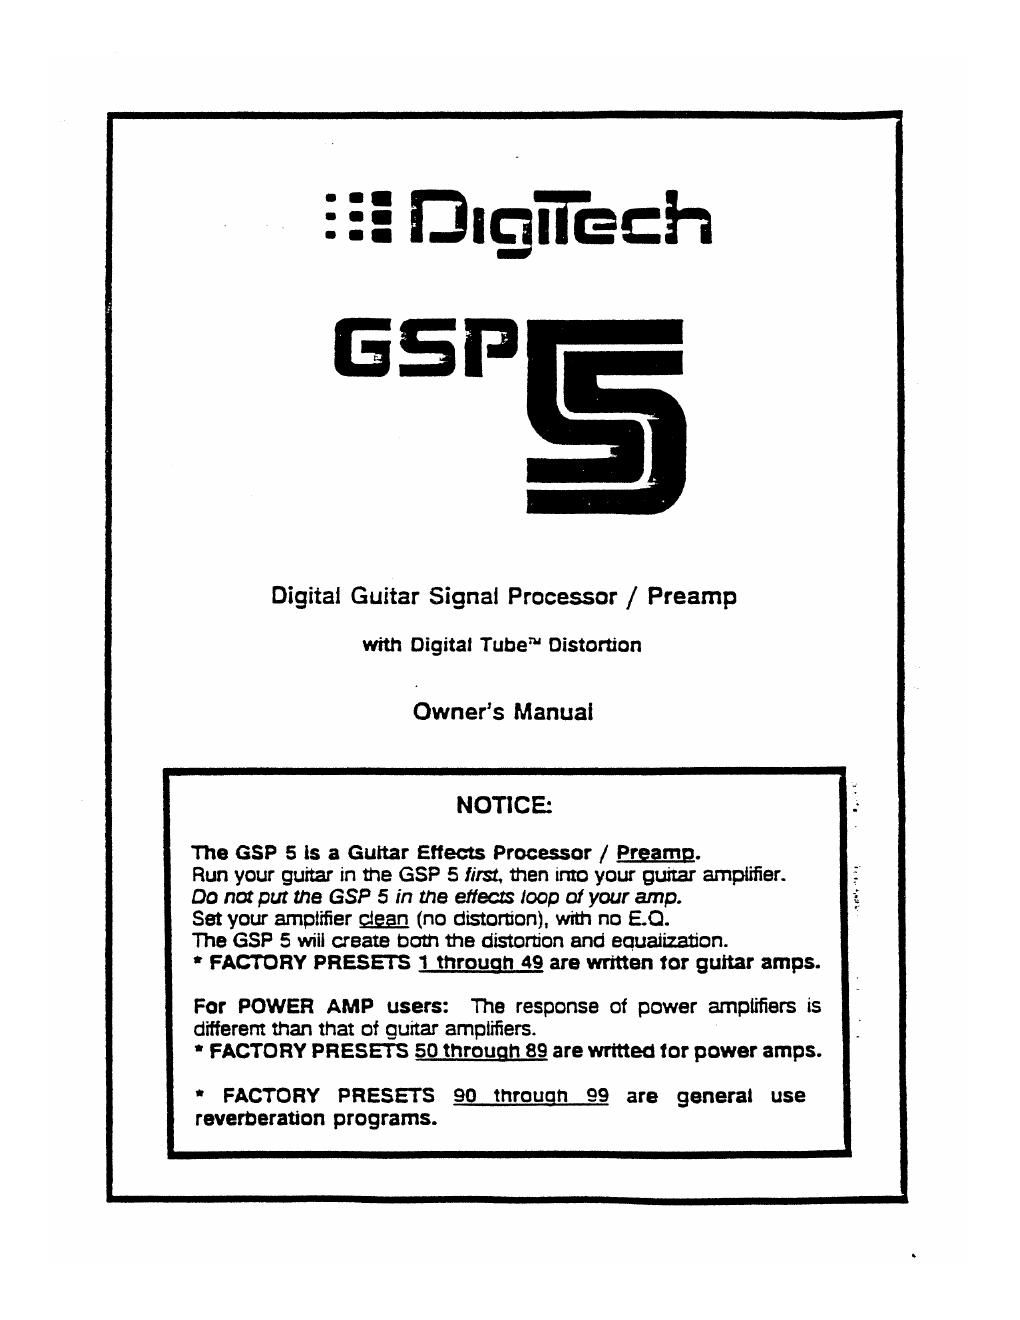 digitech gsp 5 owner manual